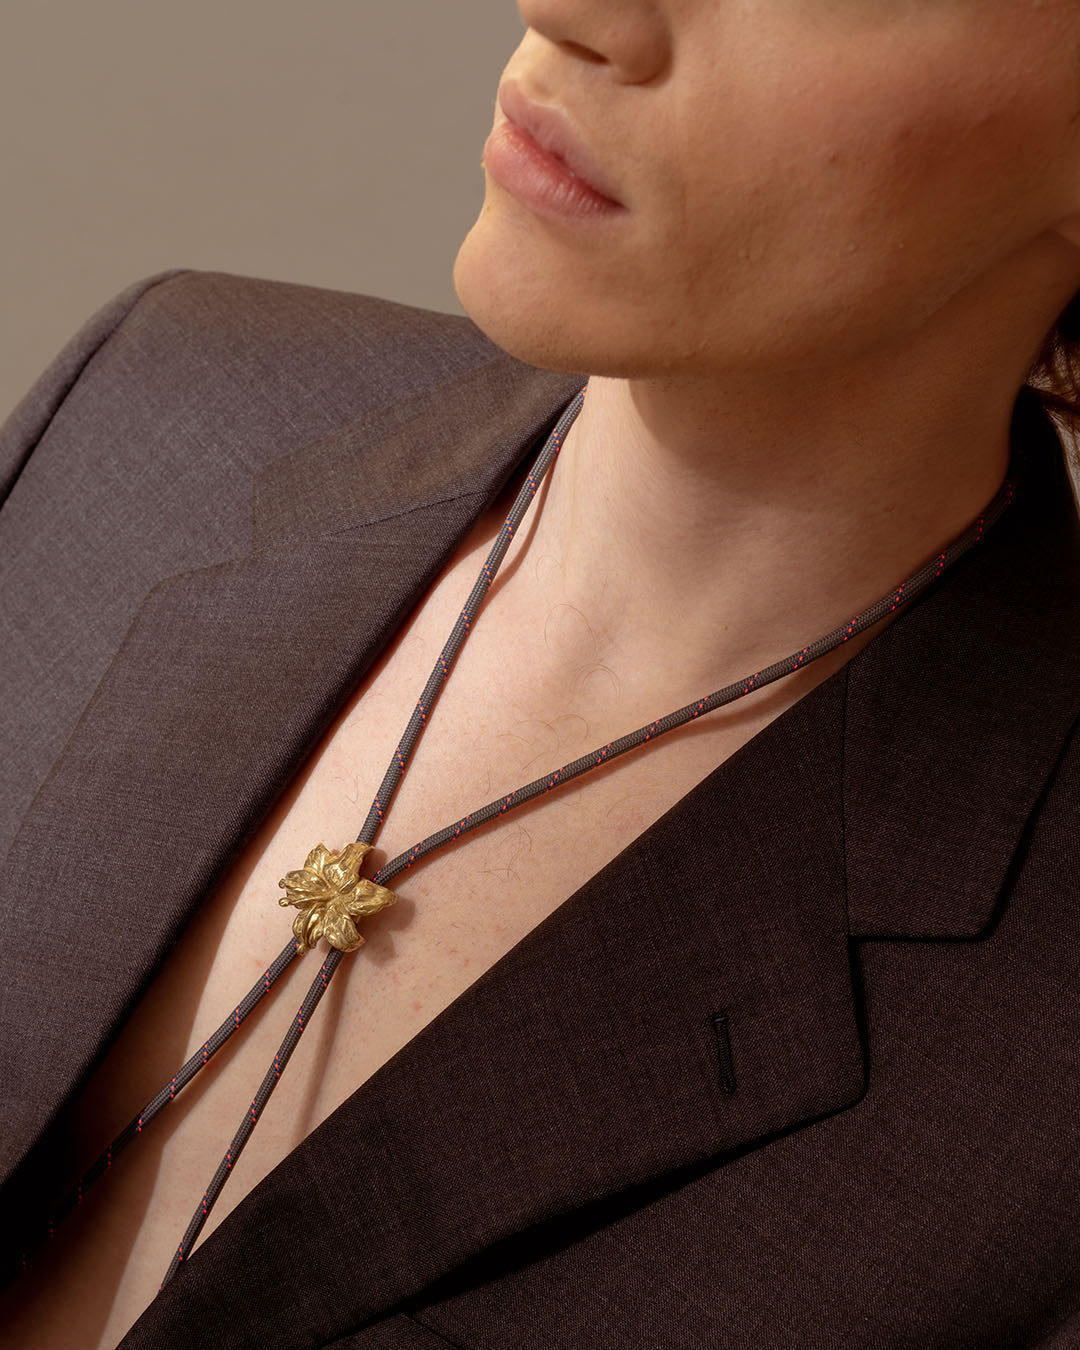 Bolo tie handmade rope jewelry neckace handcrafted bronze